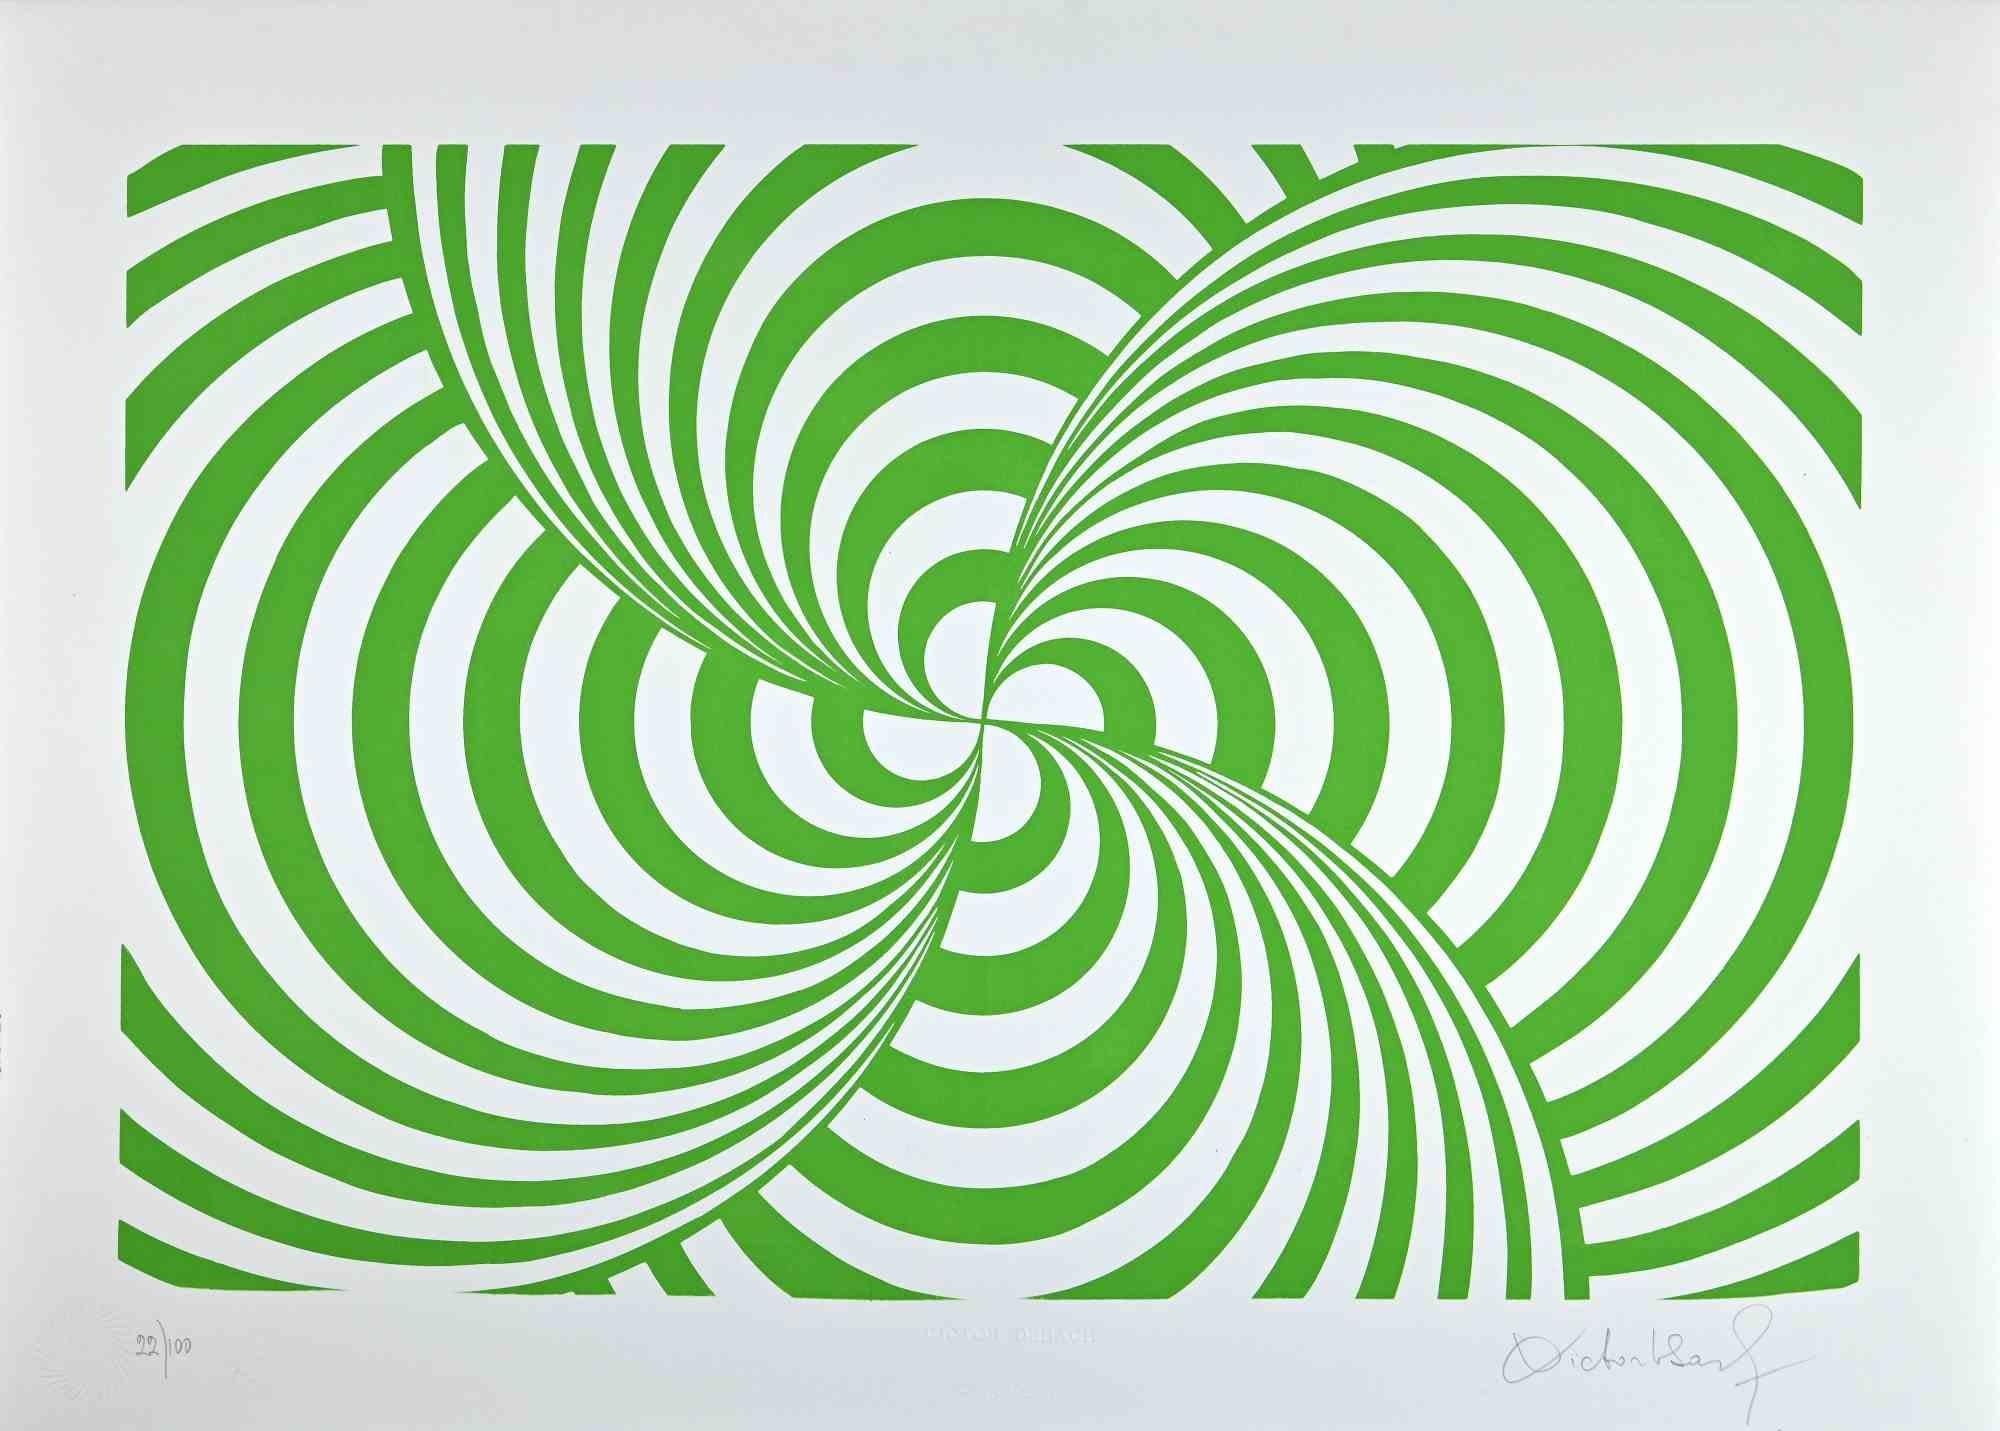 Abstract Print Victor Debach - Composition abstraite verte - Impression sérigraphiée de V. Debach - 1970